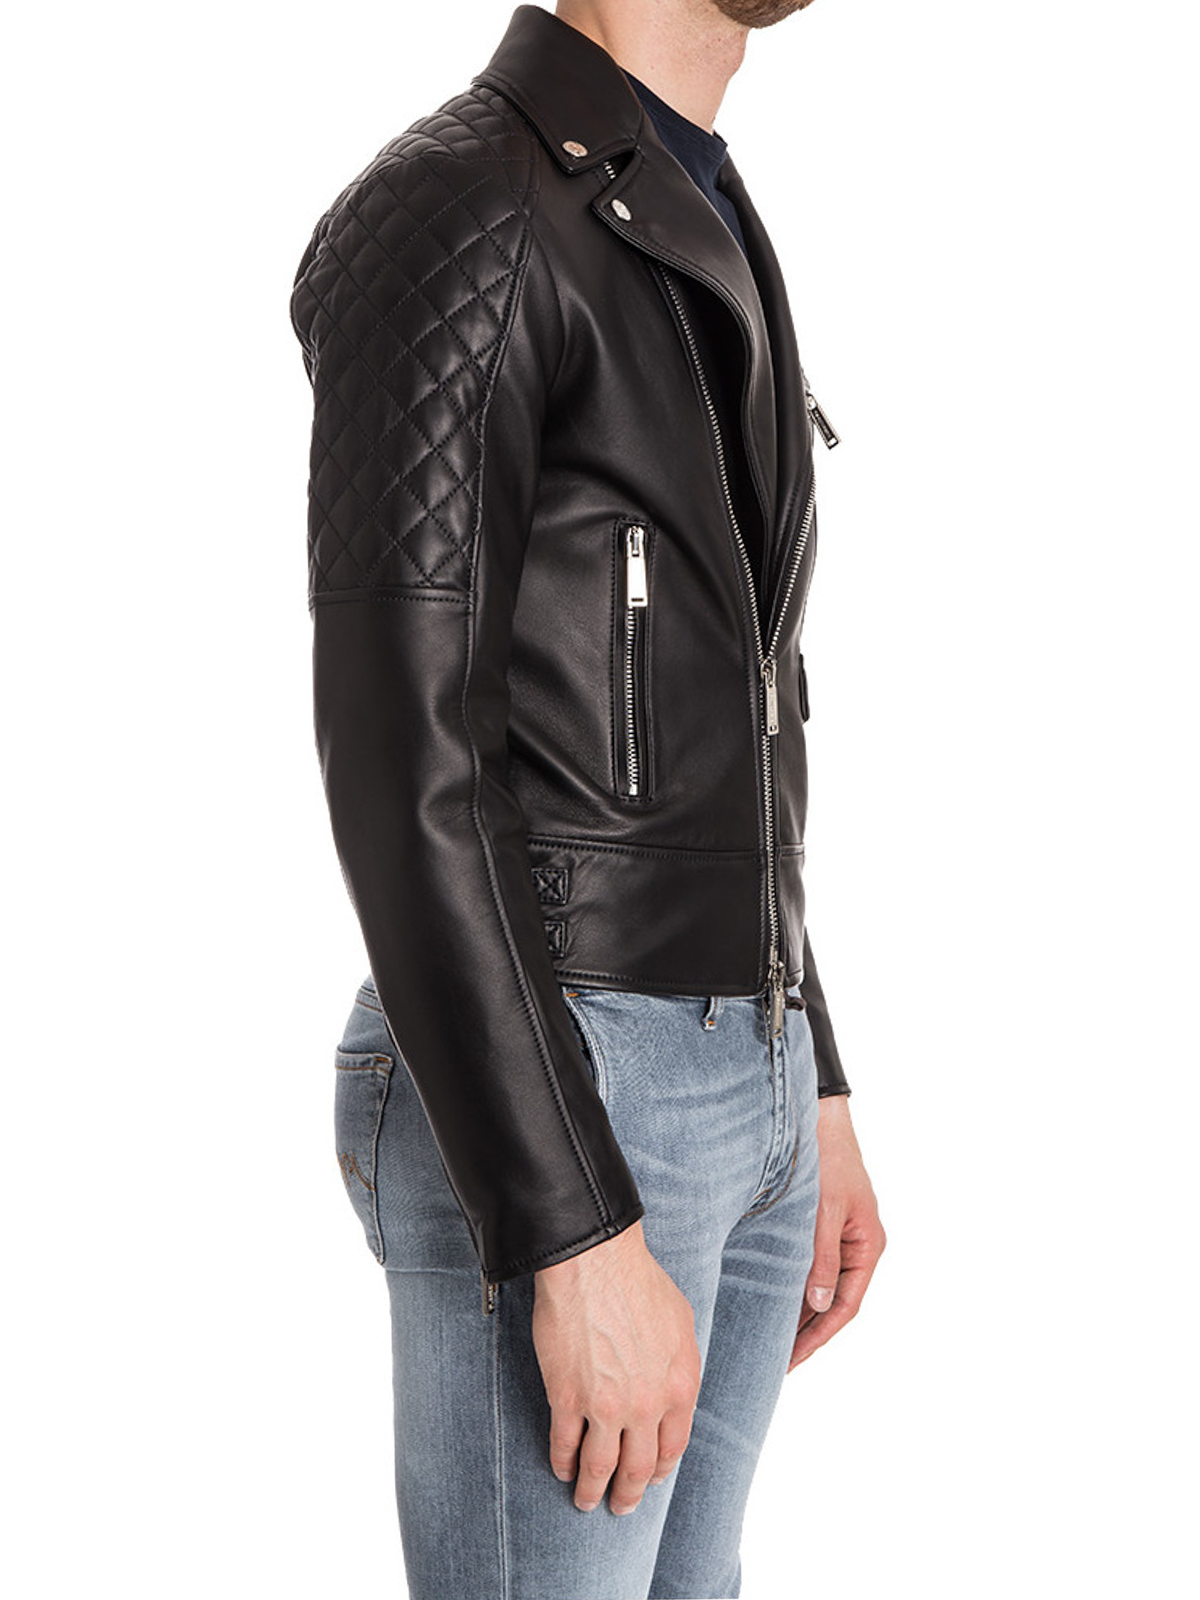 dsquared leather jacket